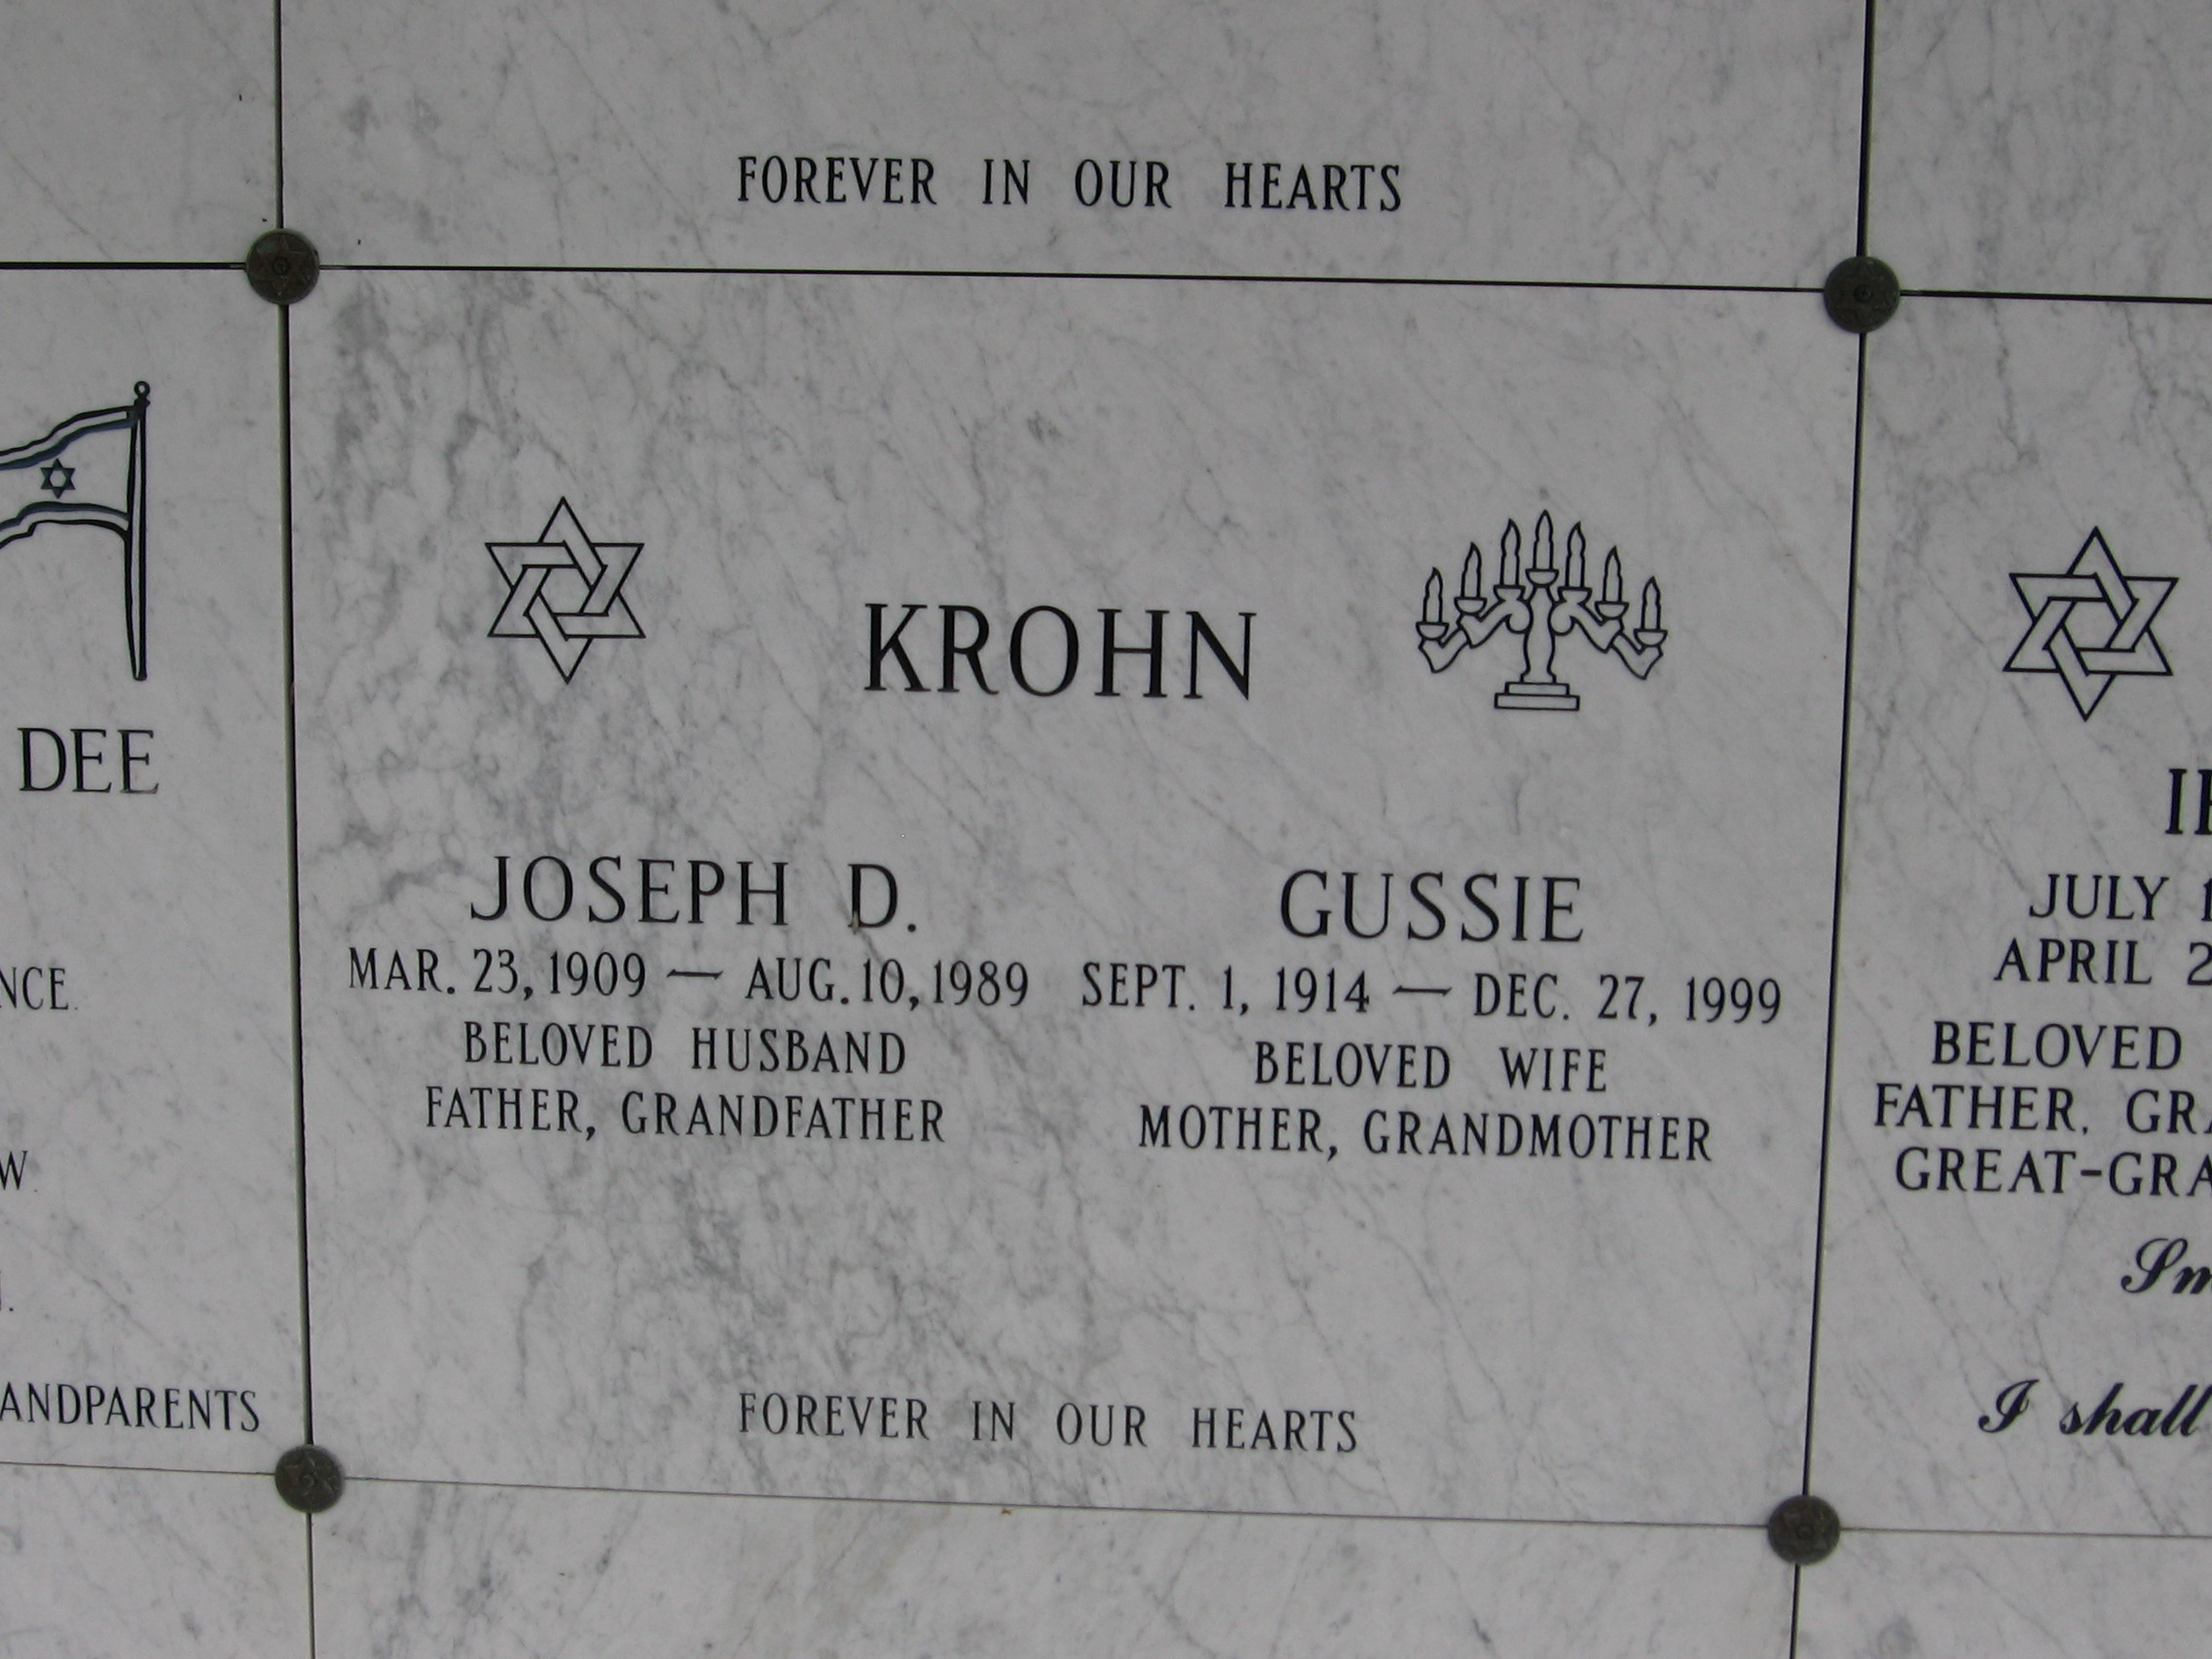 Joseph D Krohn